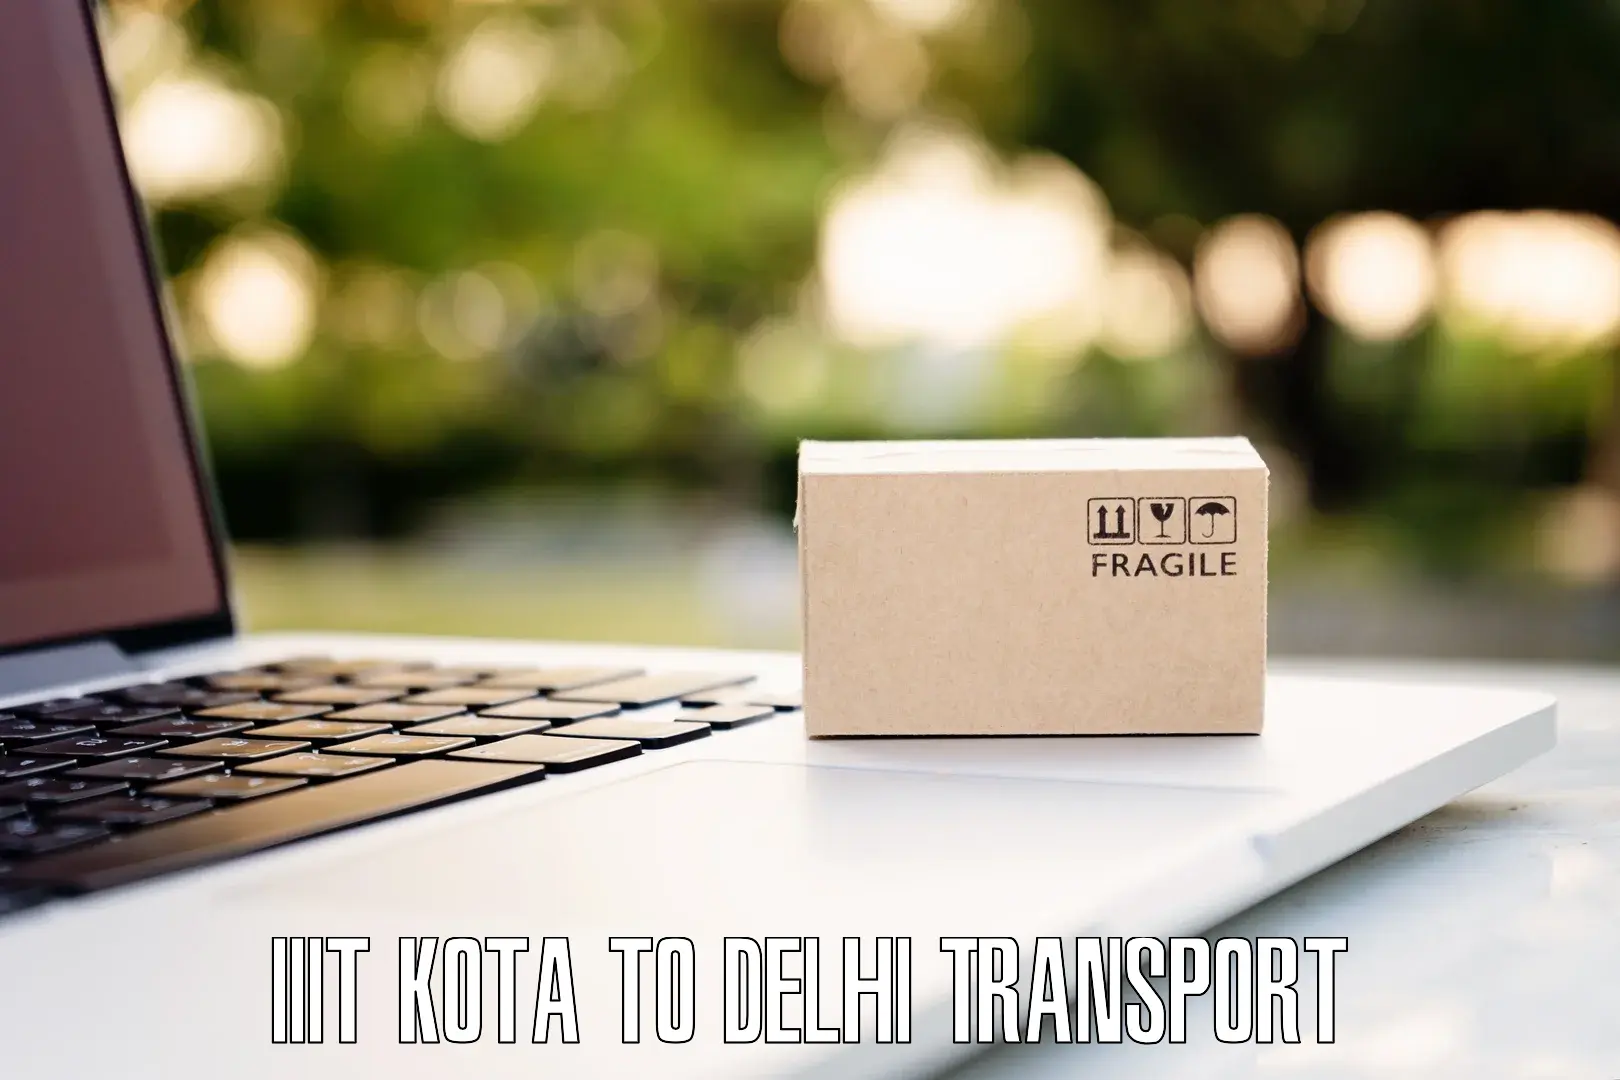 Transport in sharing IIIT Kota to NIT Delhi